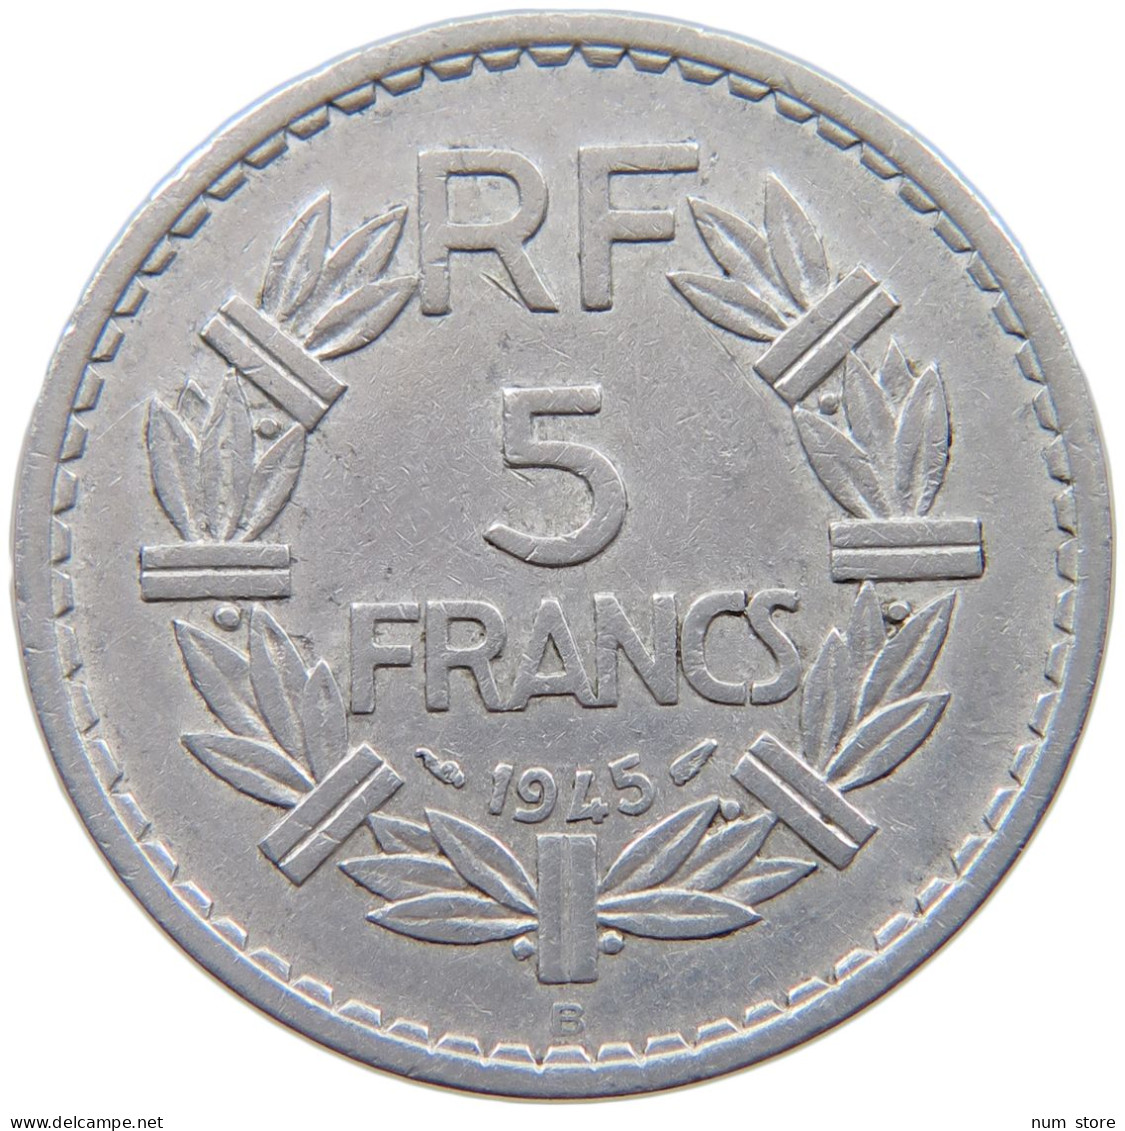 FRANCE 5 FRANCS 1945 B  #a060 0141 - 5 Francs